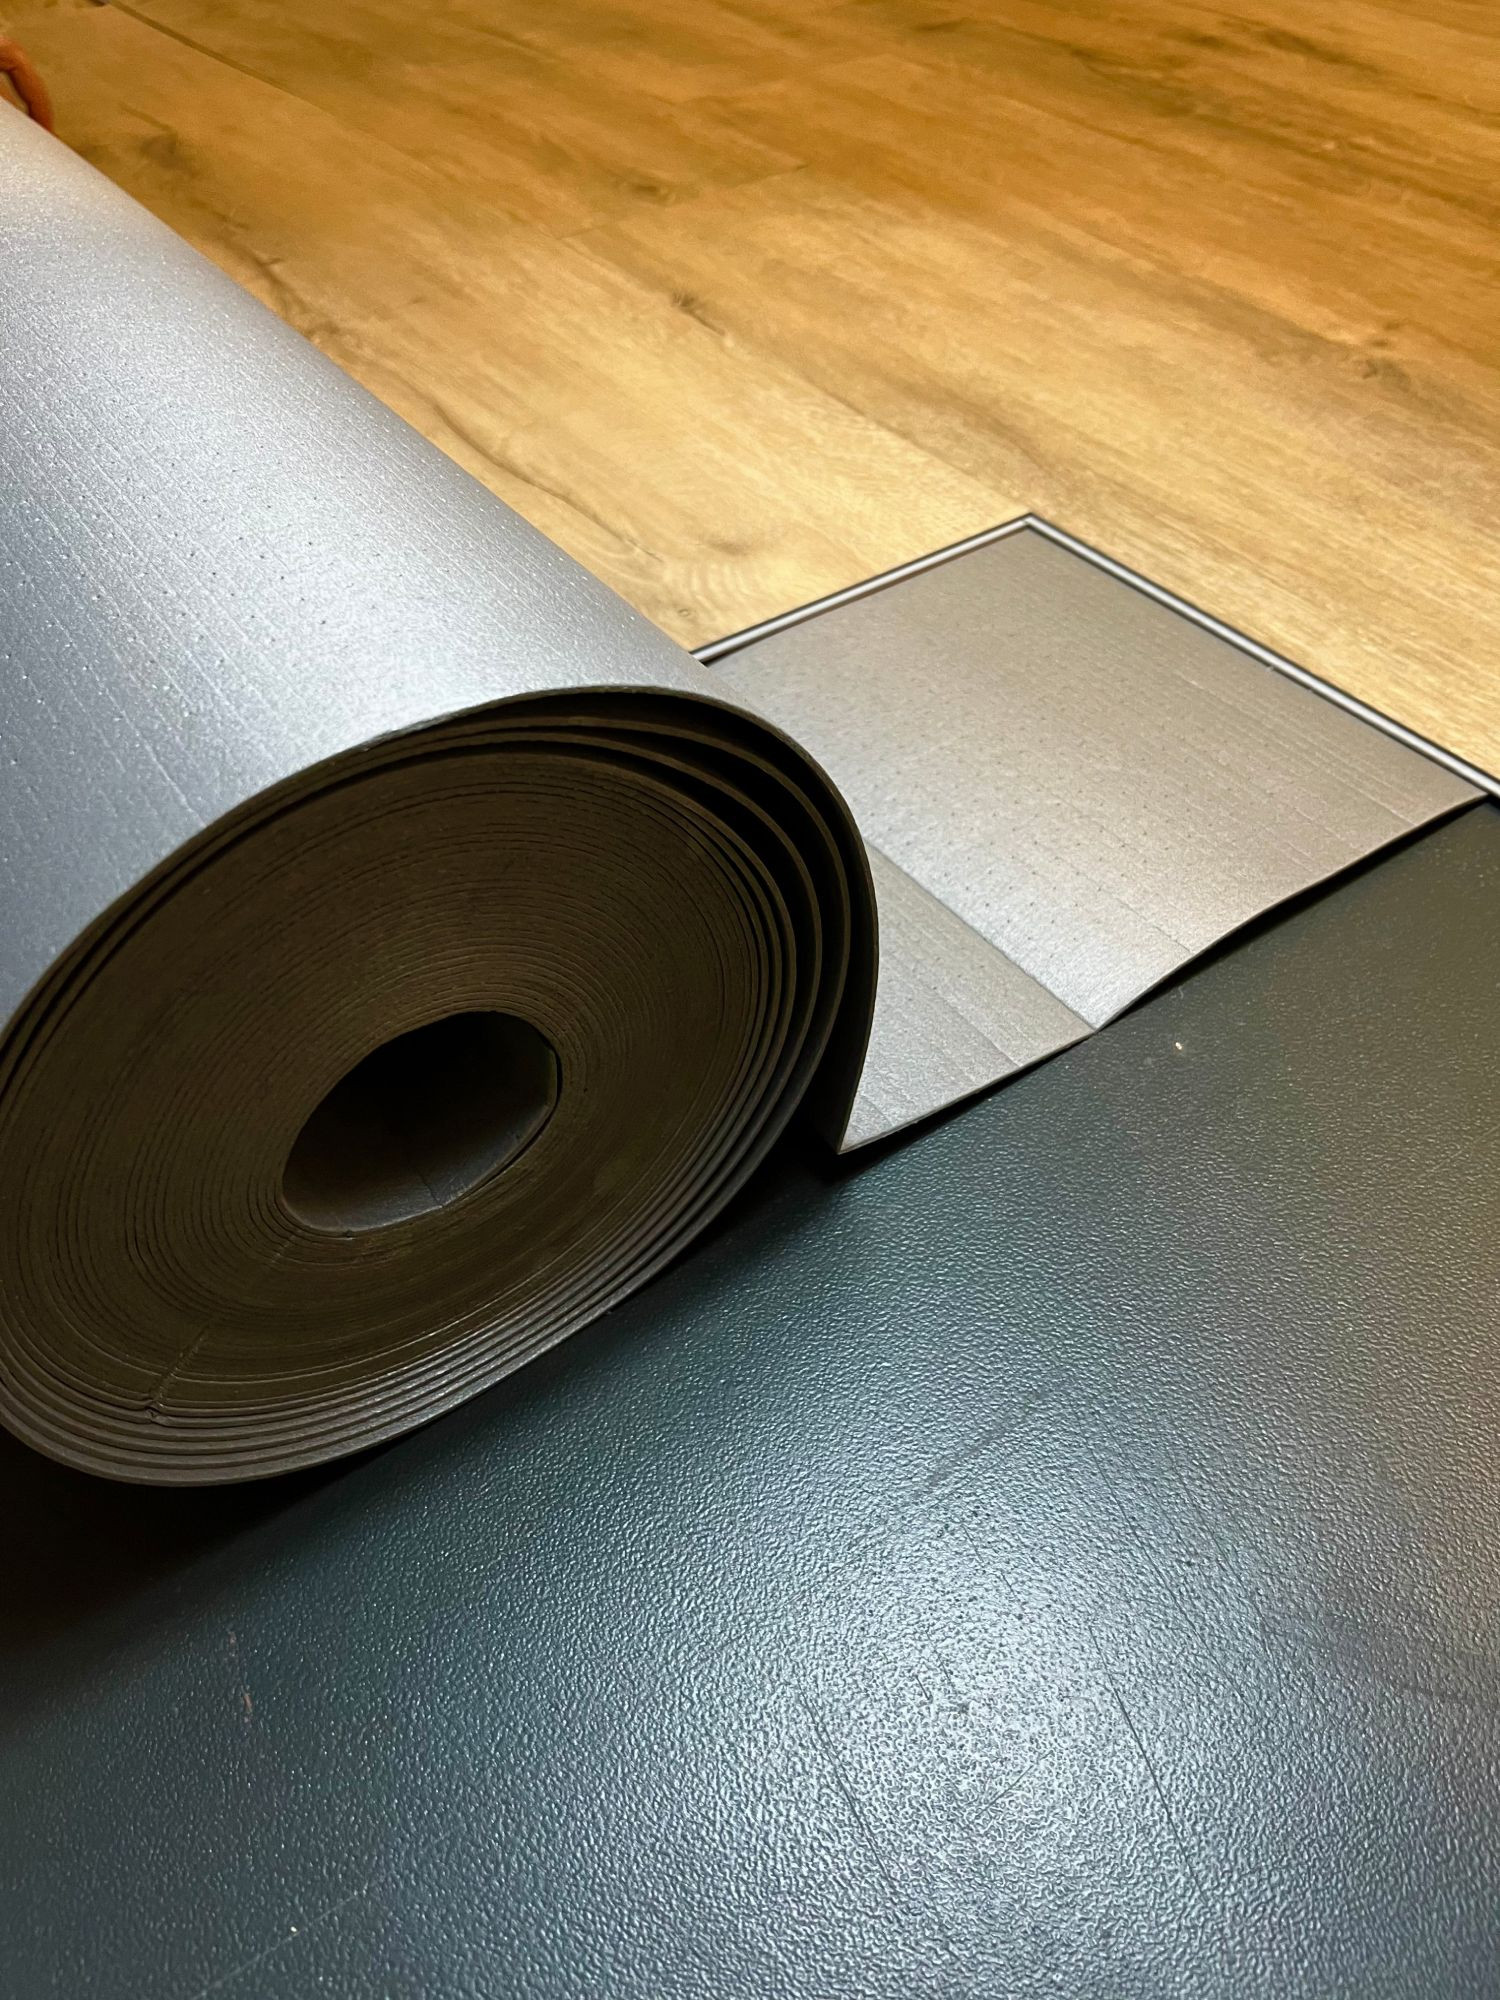 Podložka pod podlahu Profi Floor 2 mm šedá-role 16,5m2 (48 rolí - 792m2 paleta)